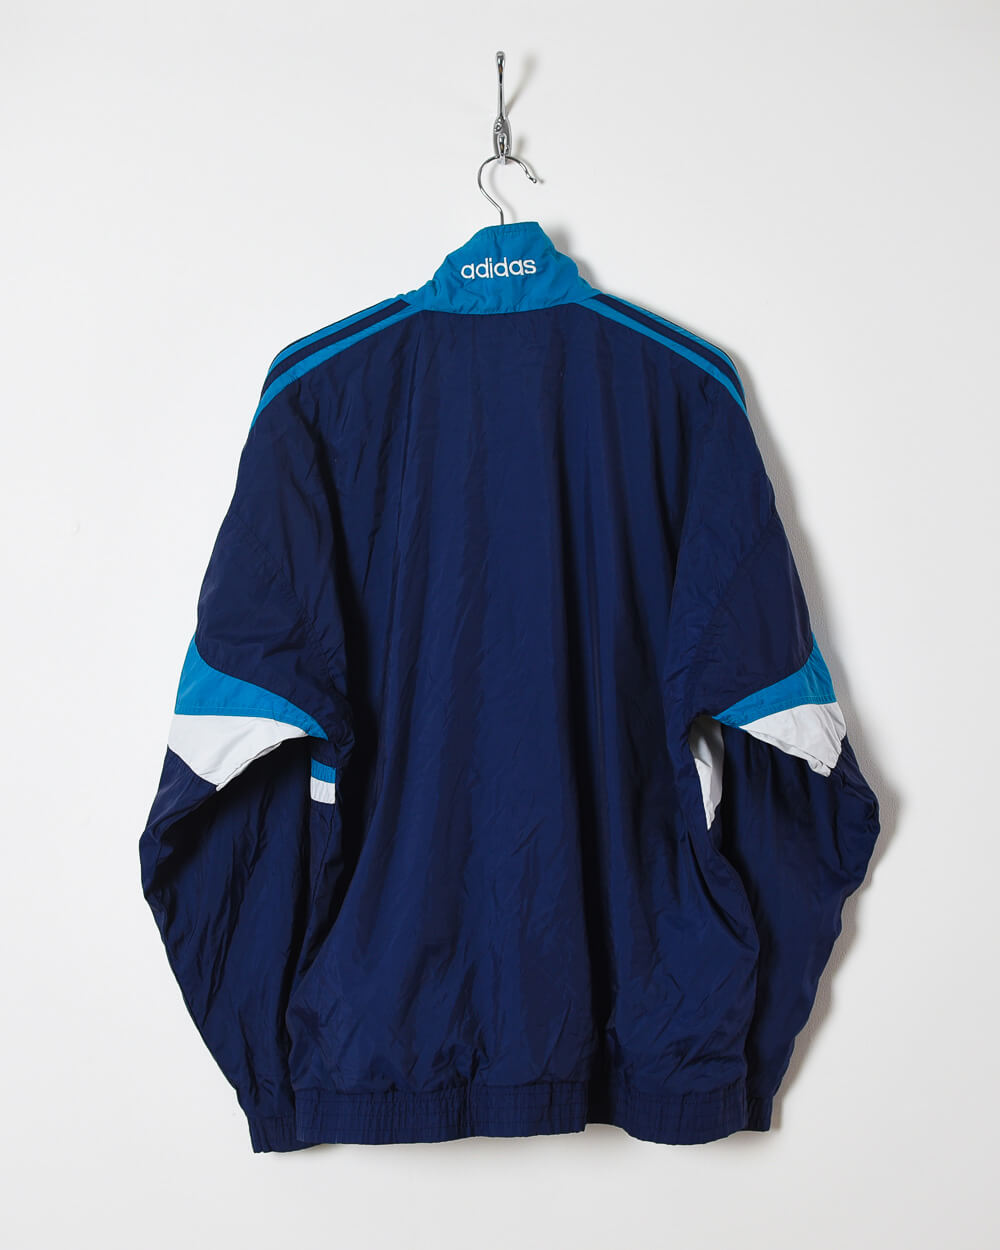 Adidas Jacket - Large - Domno Vintage 90s, 80s, 00s Retro and Vintage Clothing 